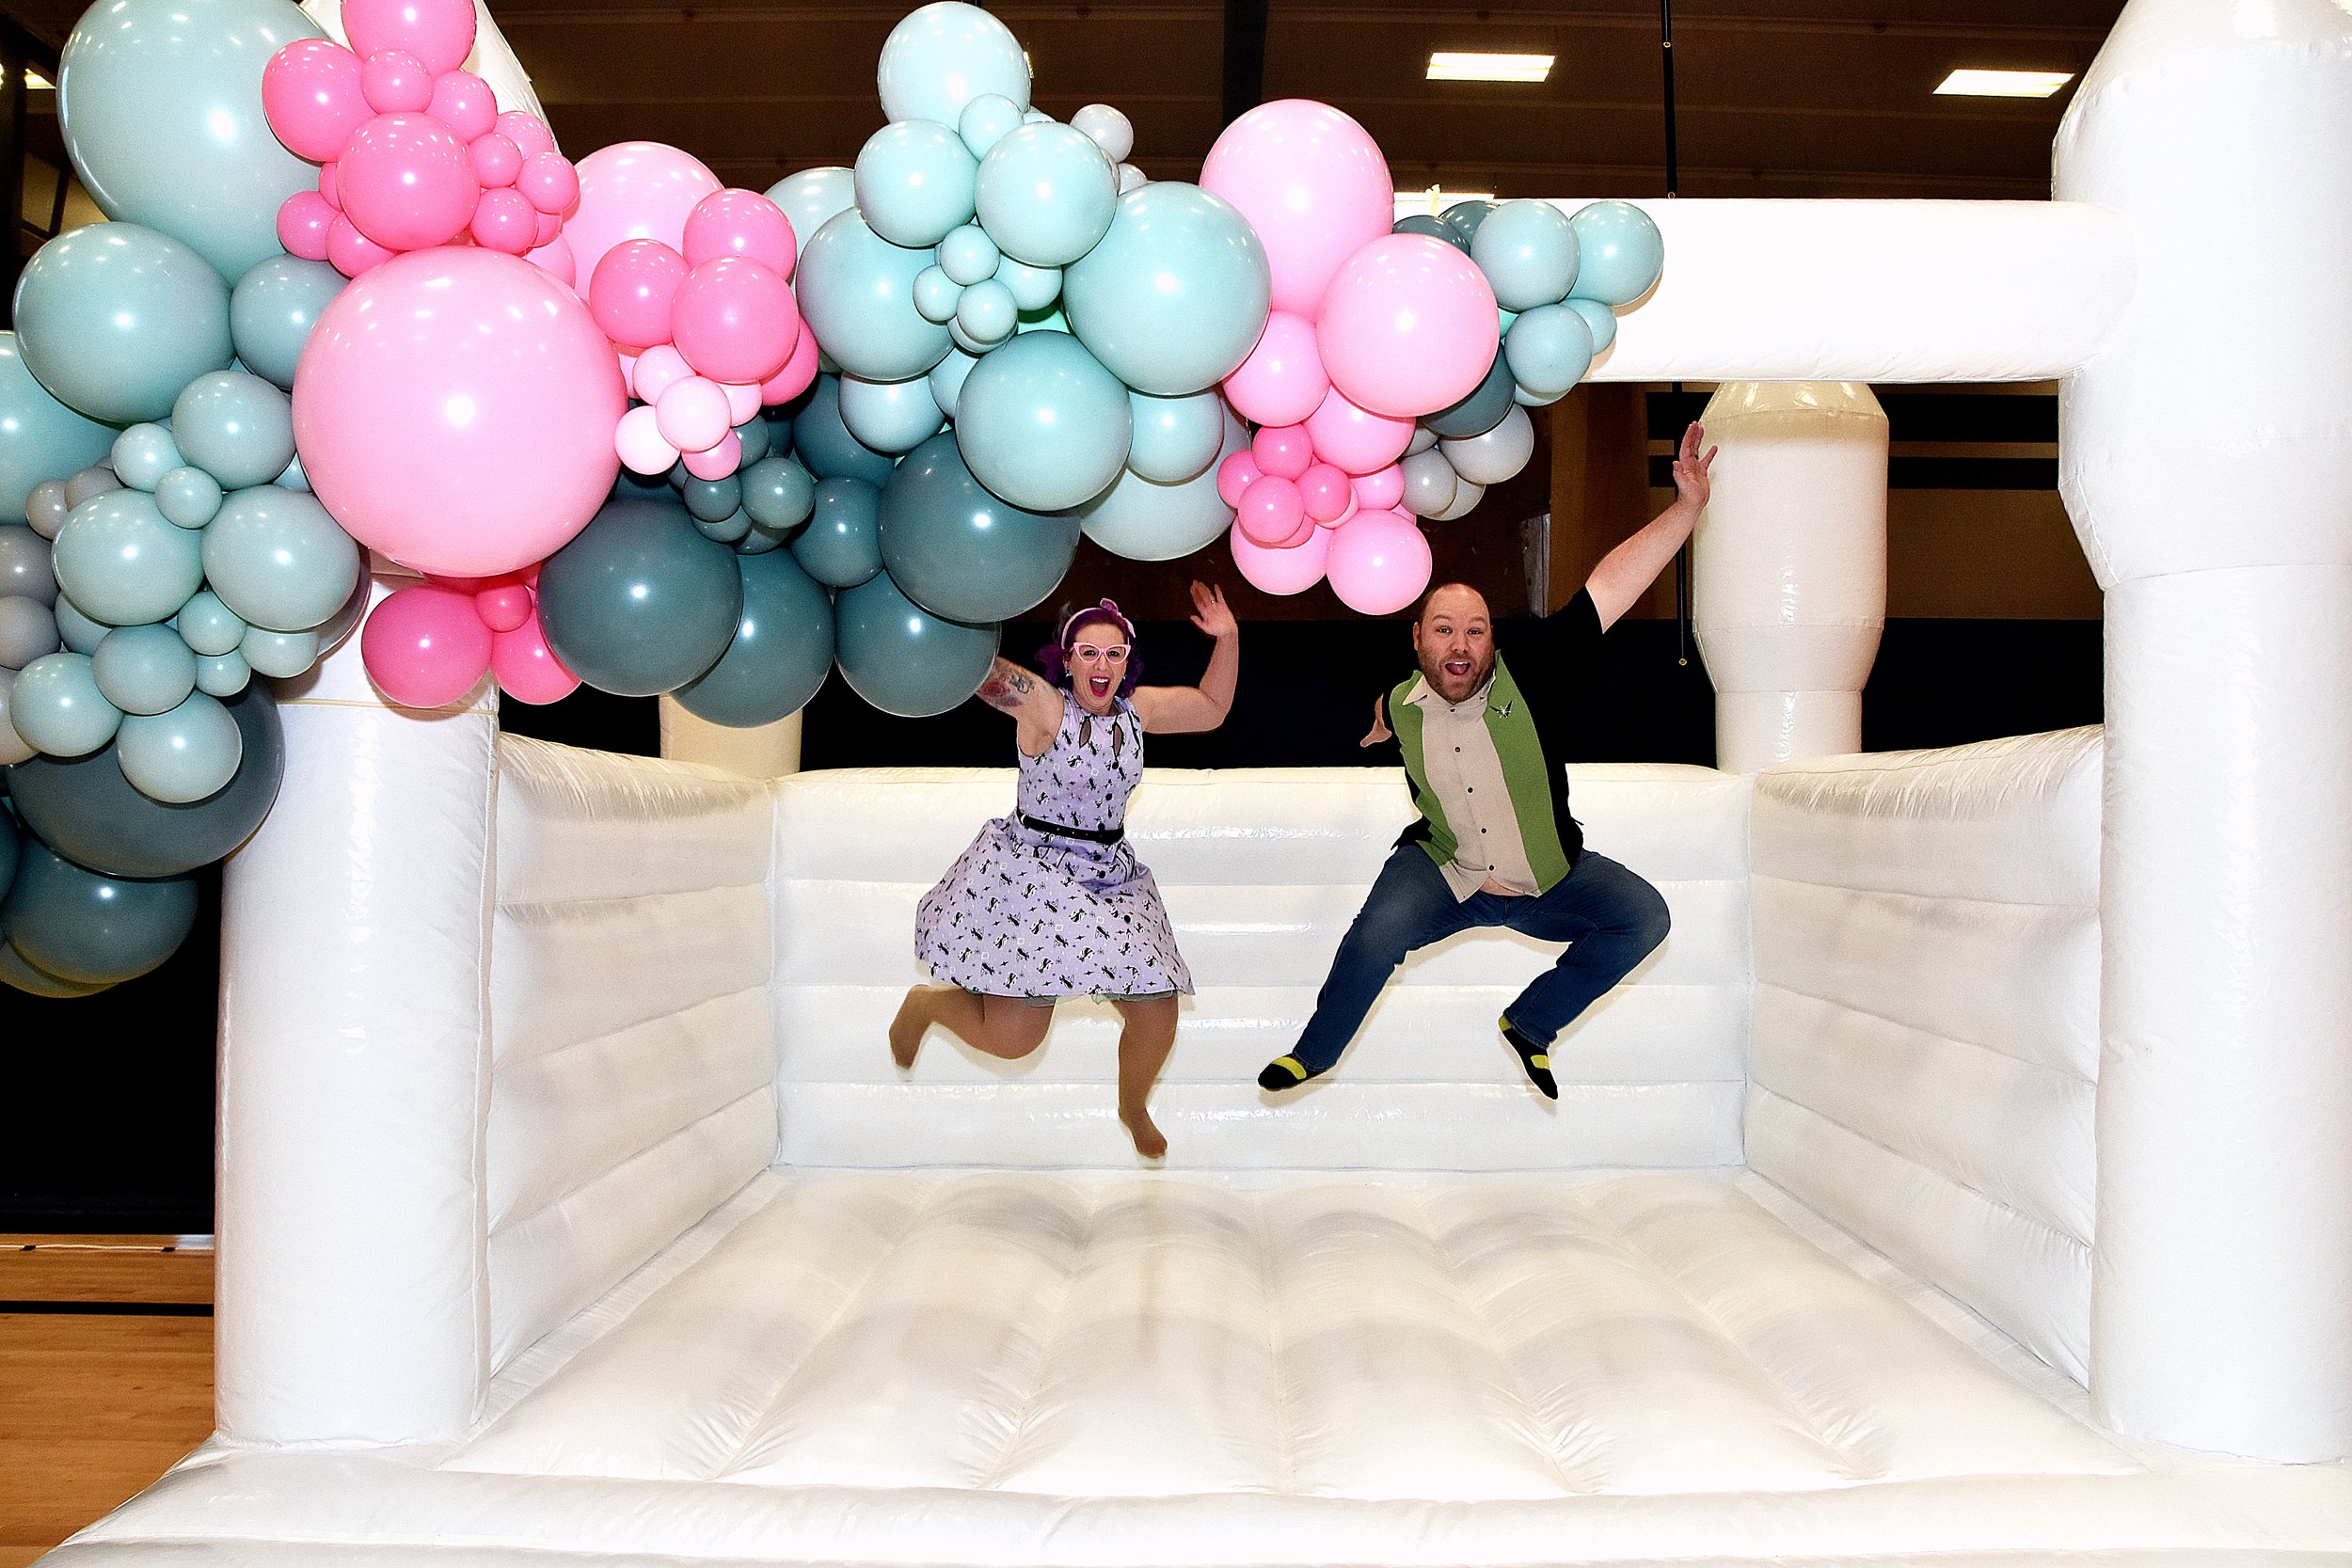 Children's birthday party decor — Luxury Balloon Decorators in